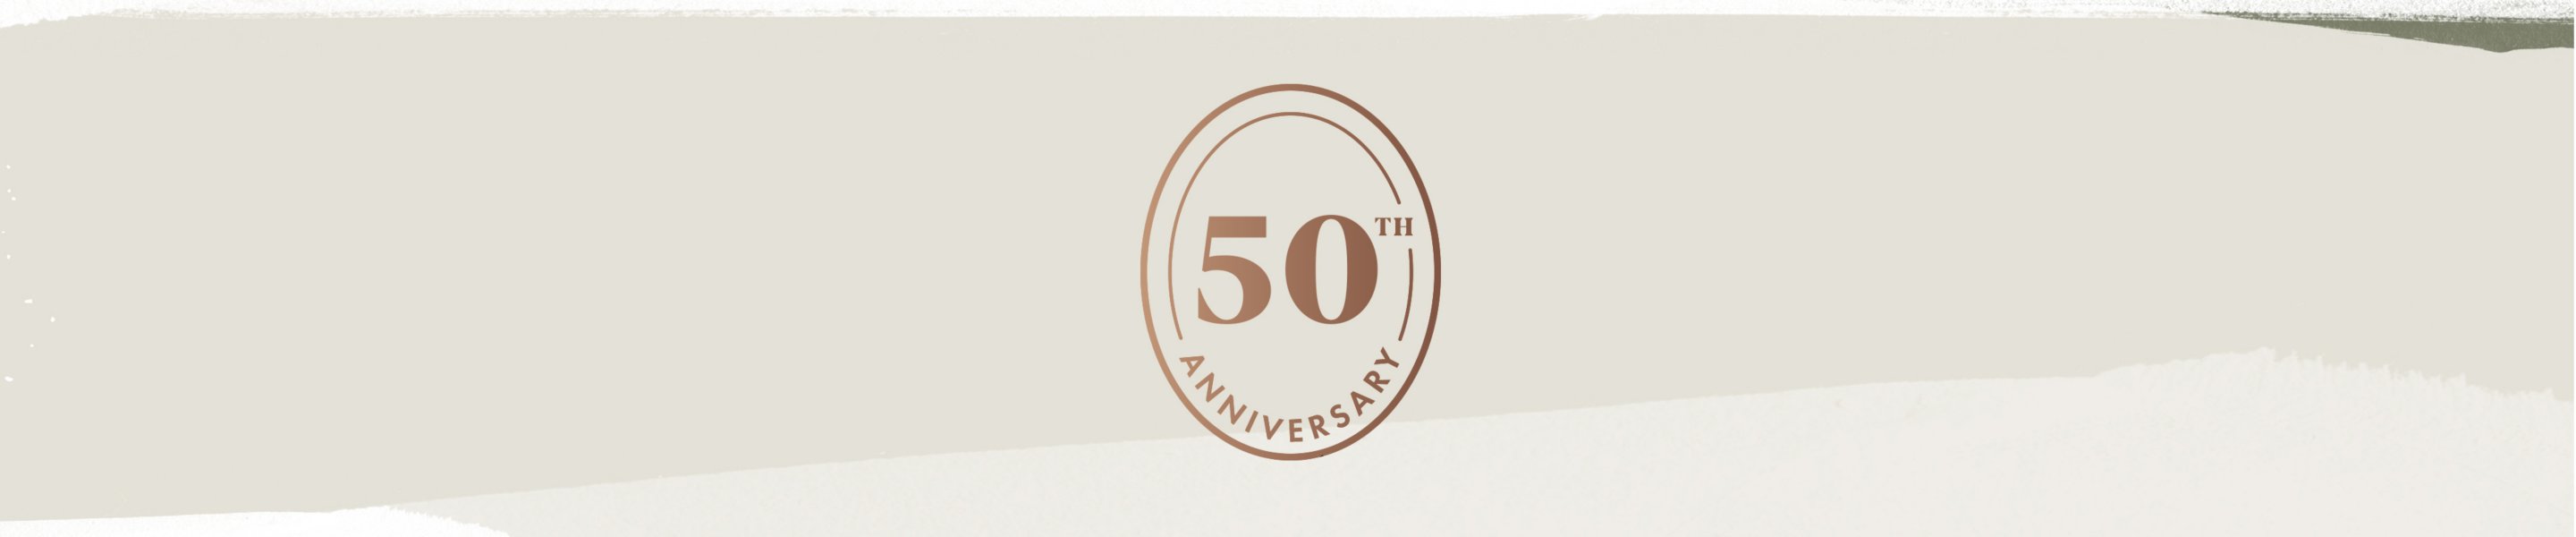 Fiftieth anniversary logo